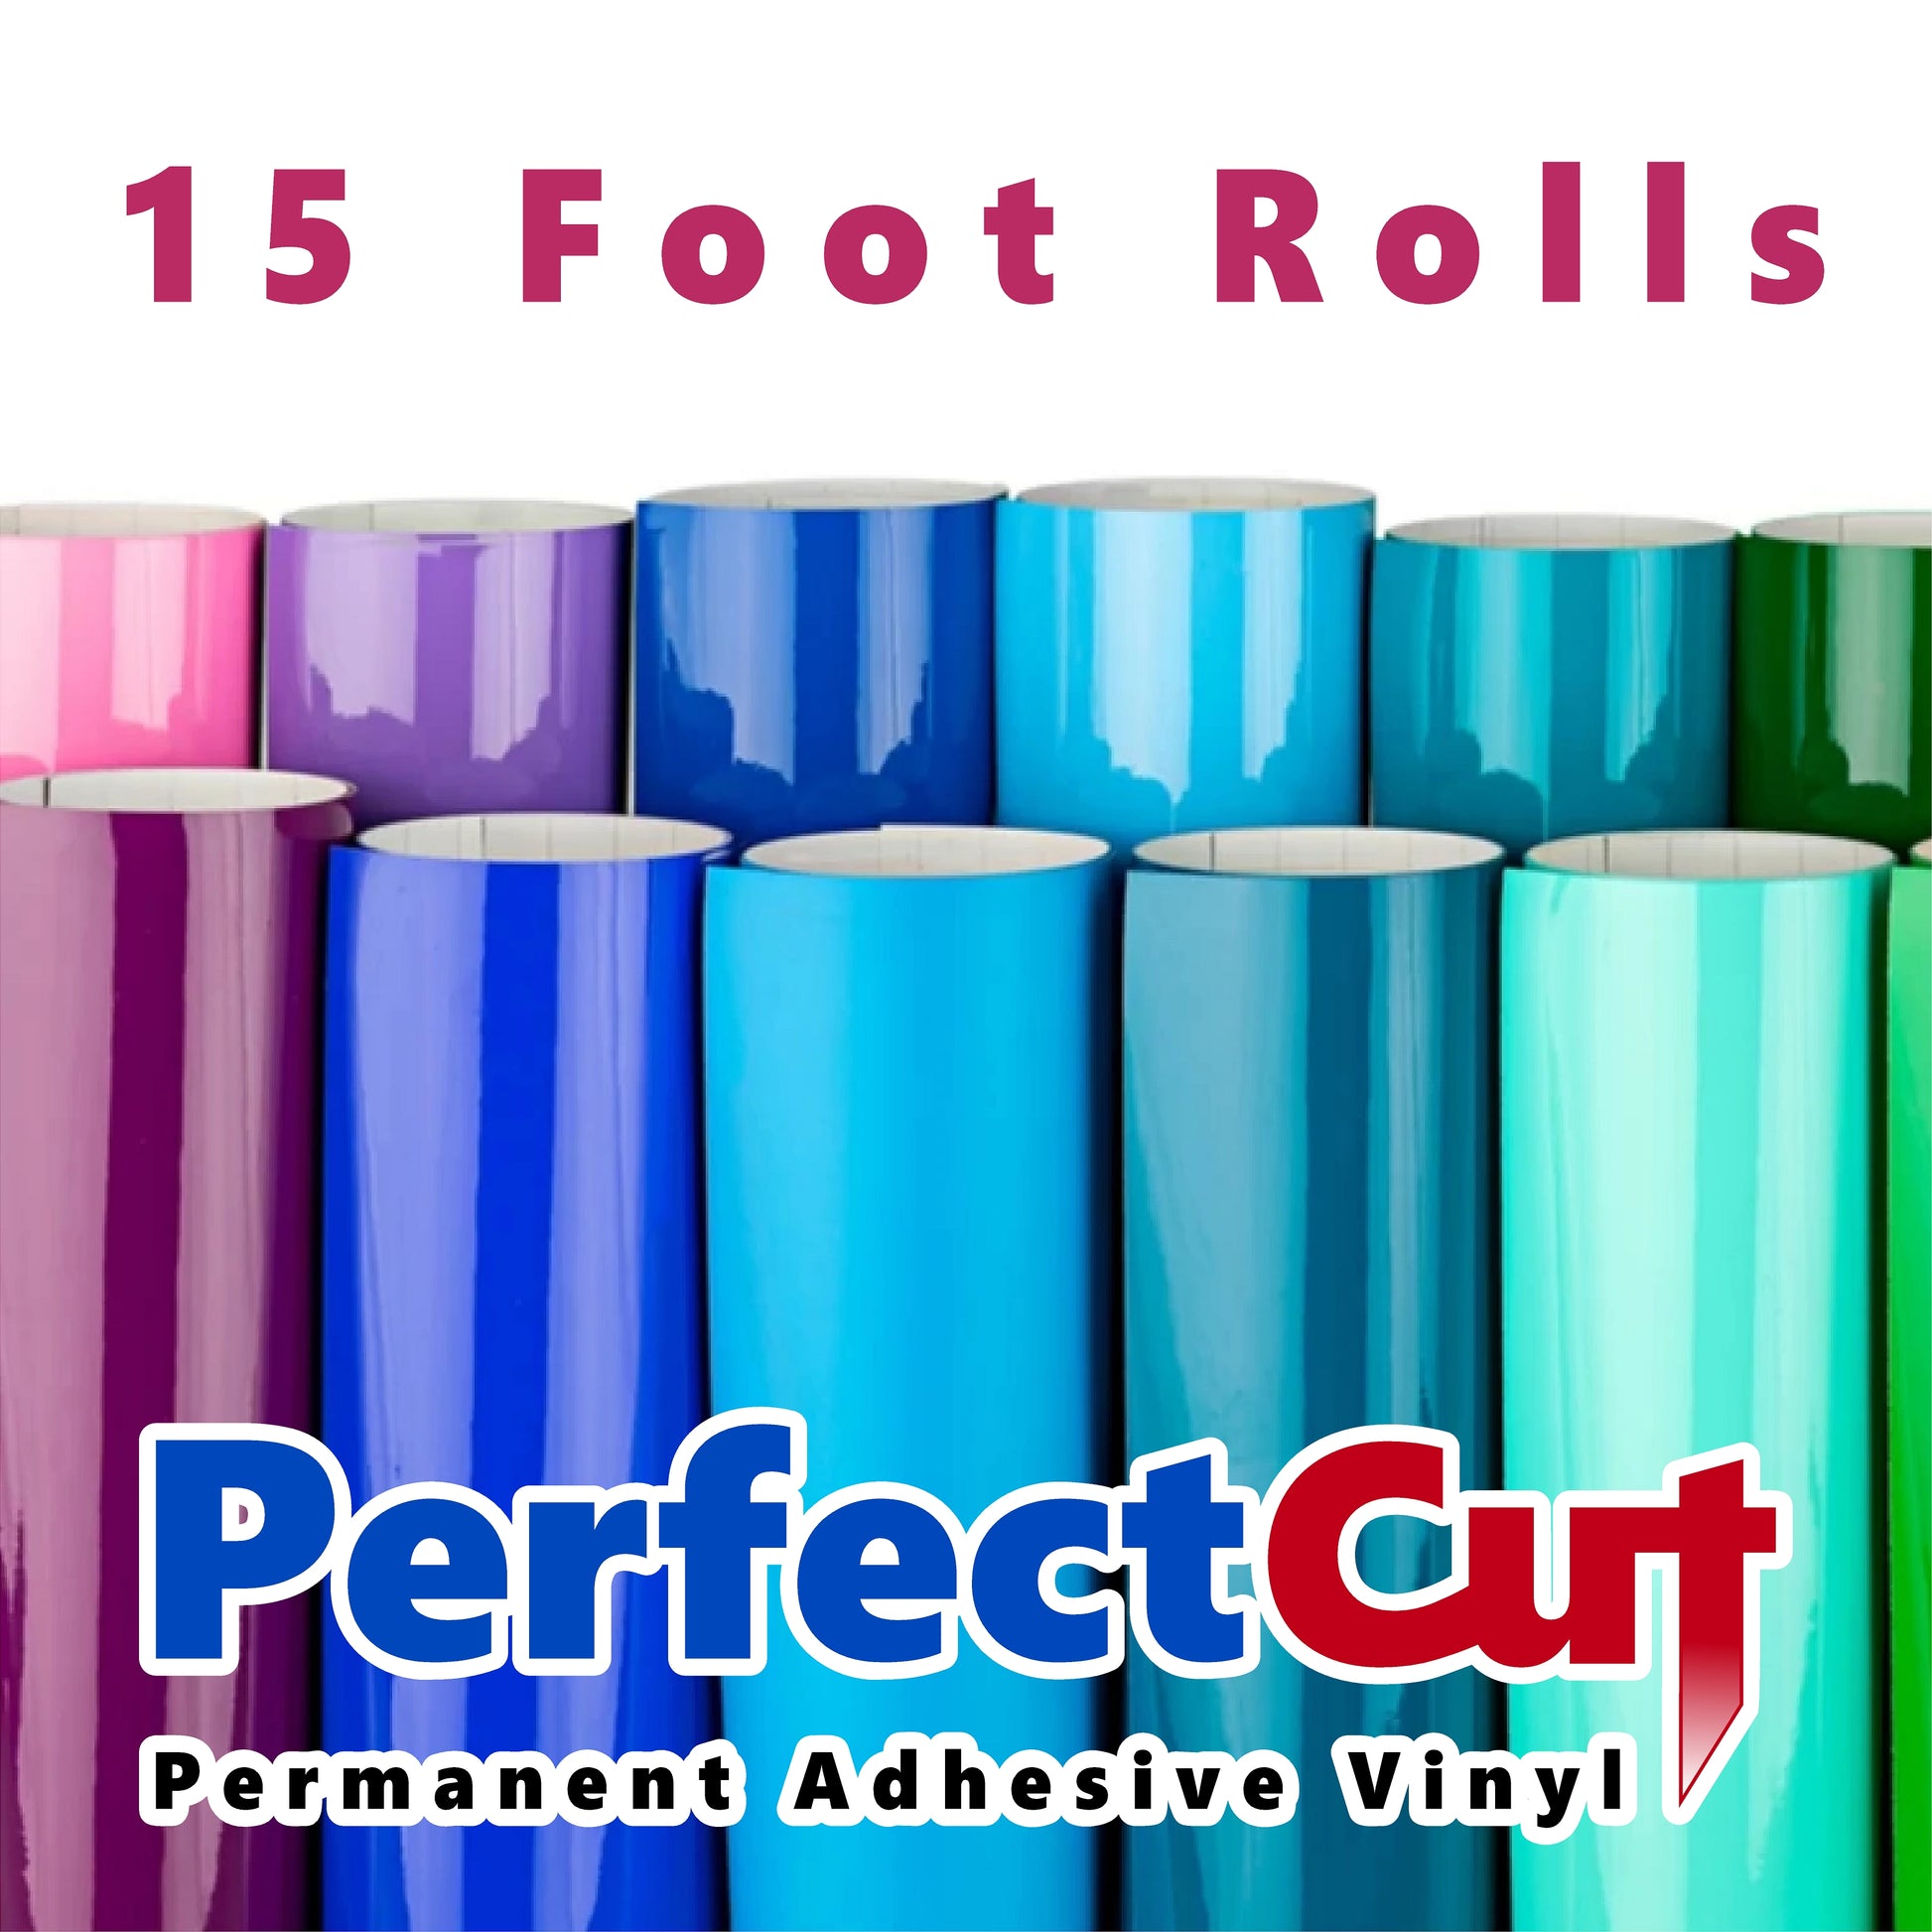 PerfectCut - Craft Vinyl - Permanent Adhesive Vinyl 40 - 5 Foot Roll Bundle  - Vinyl Me Now